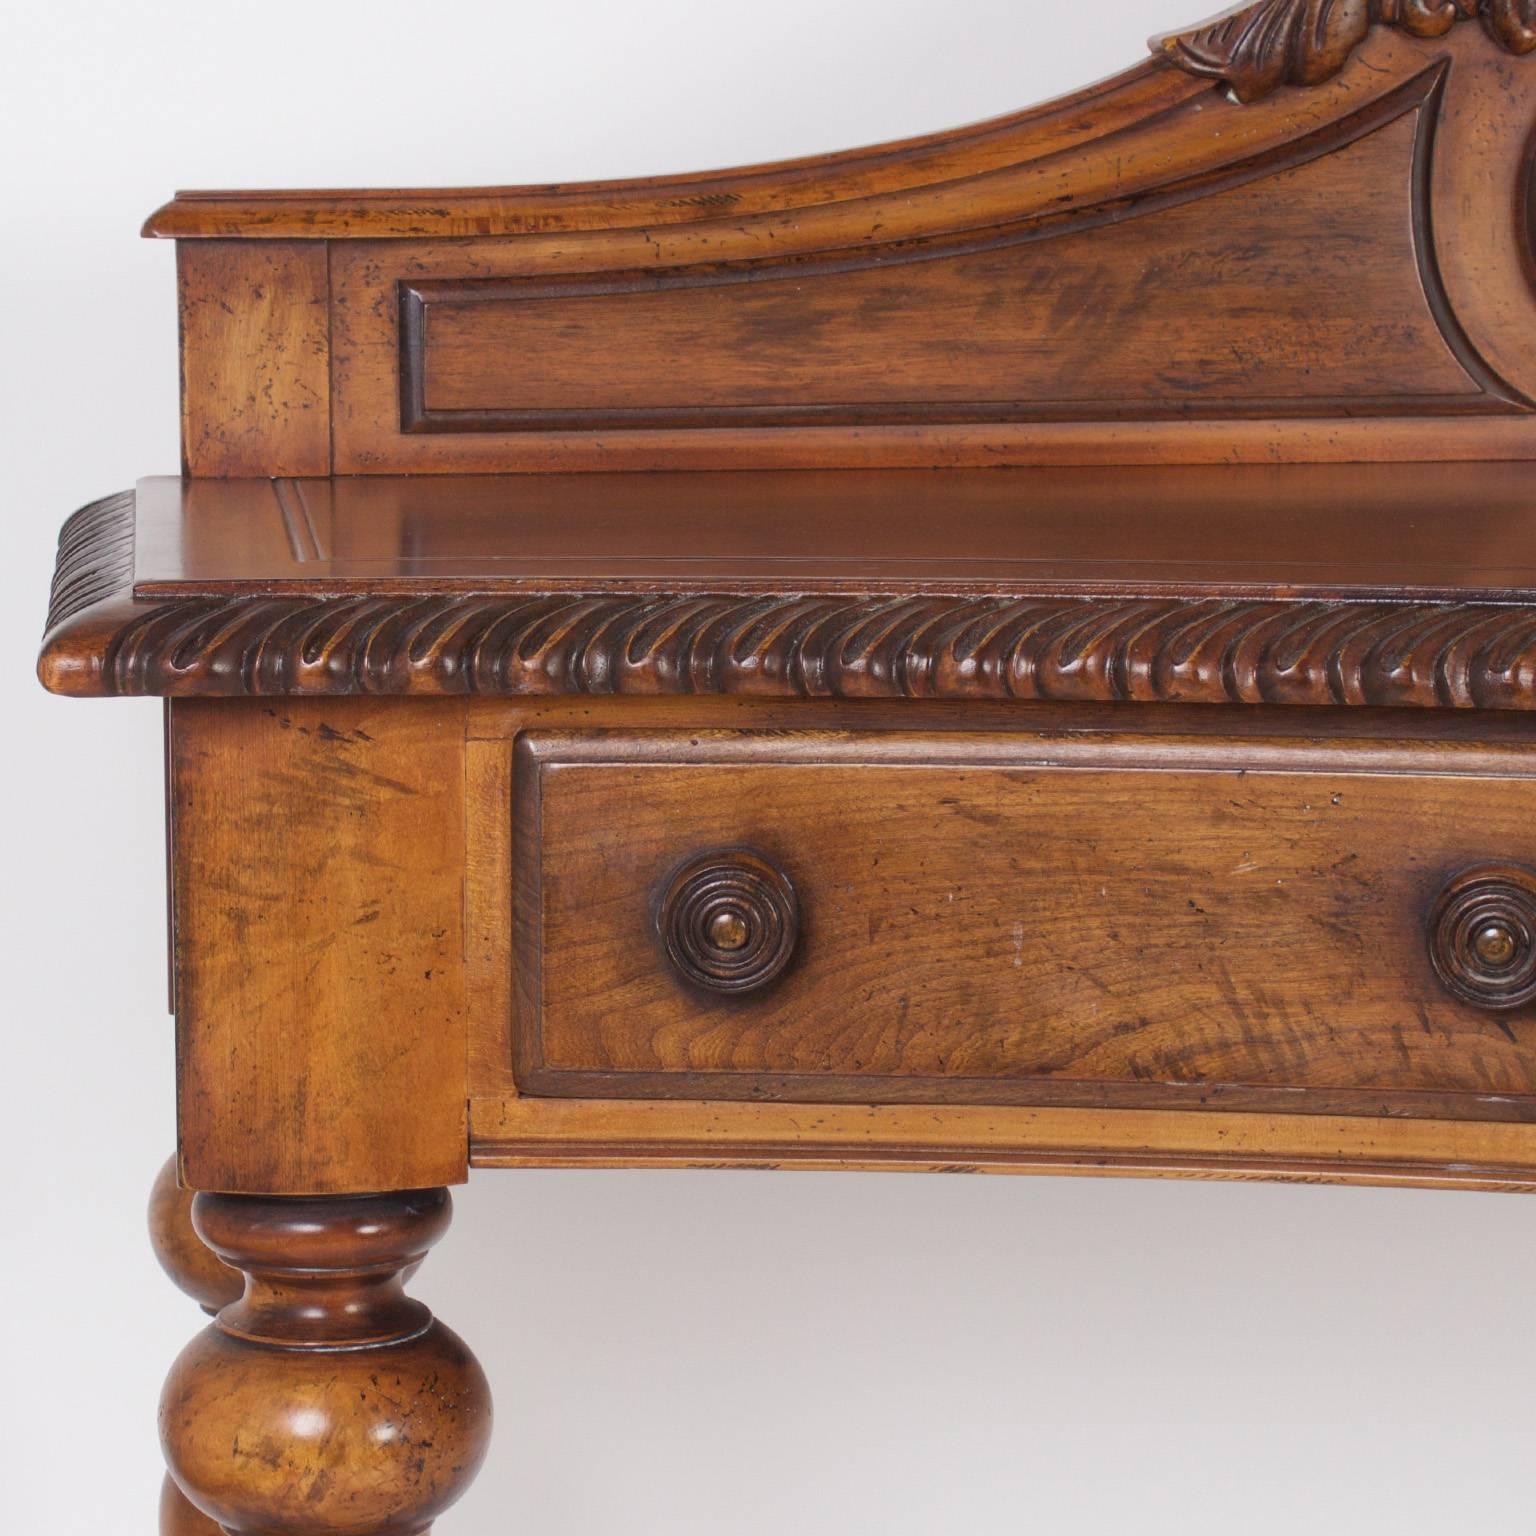 British Colonial Three-Drawer Sideboard or Server in Walnut